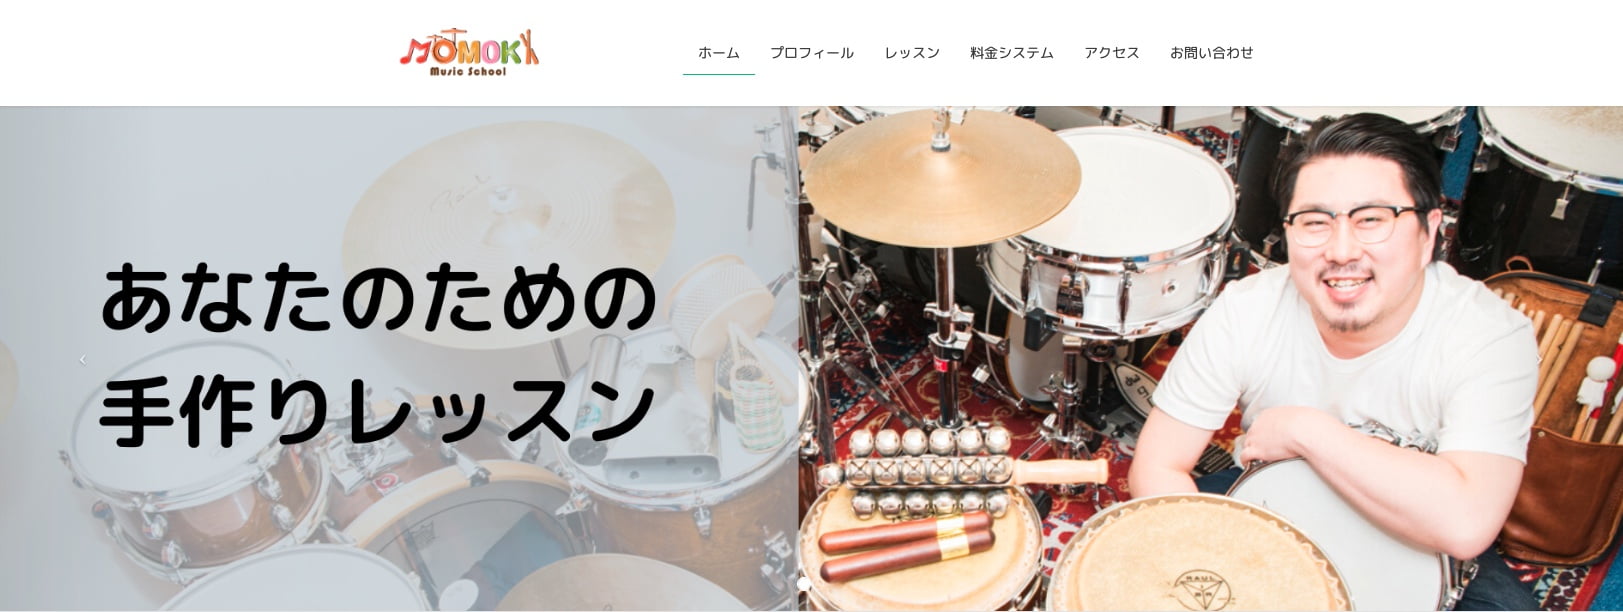 Momoki Music School